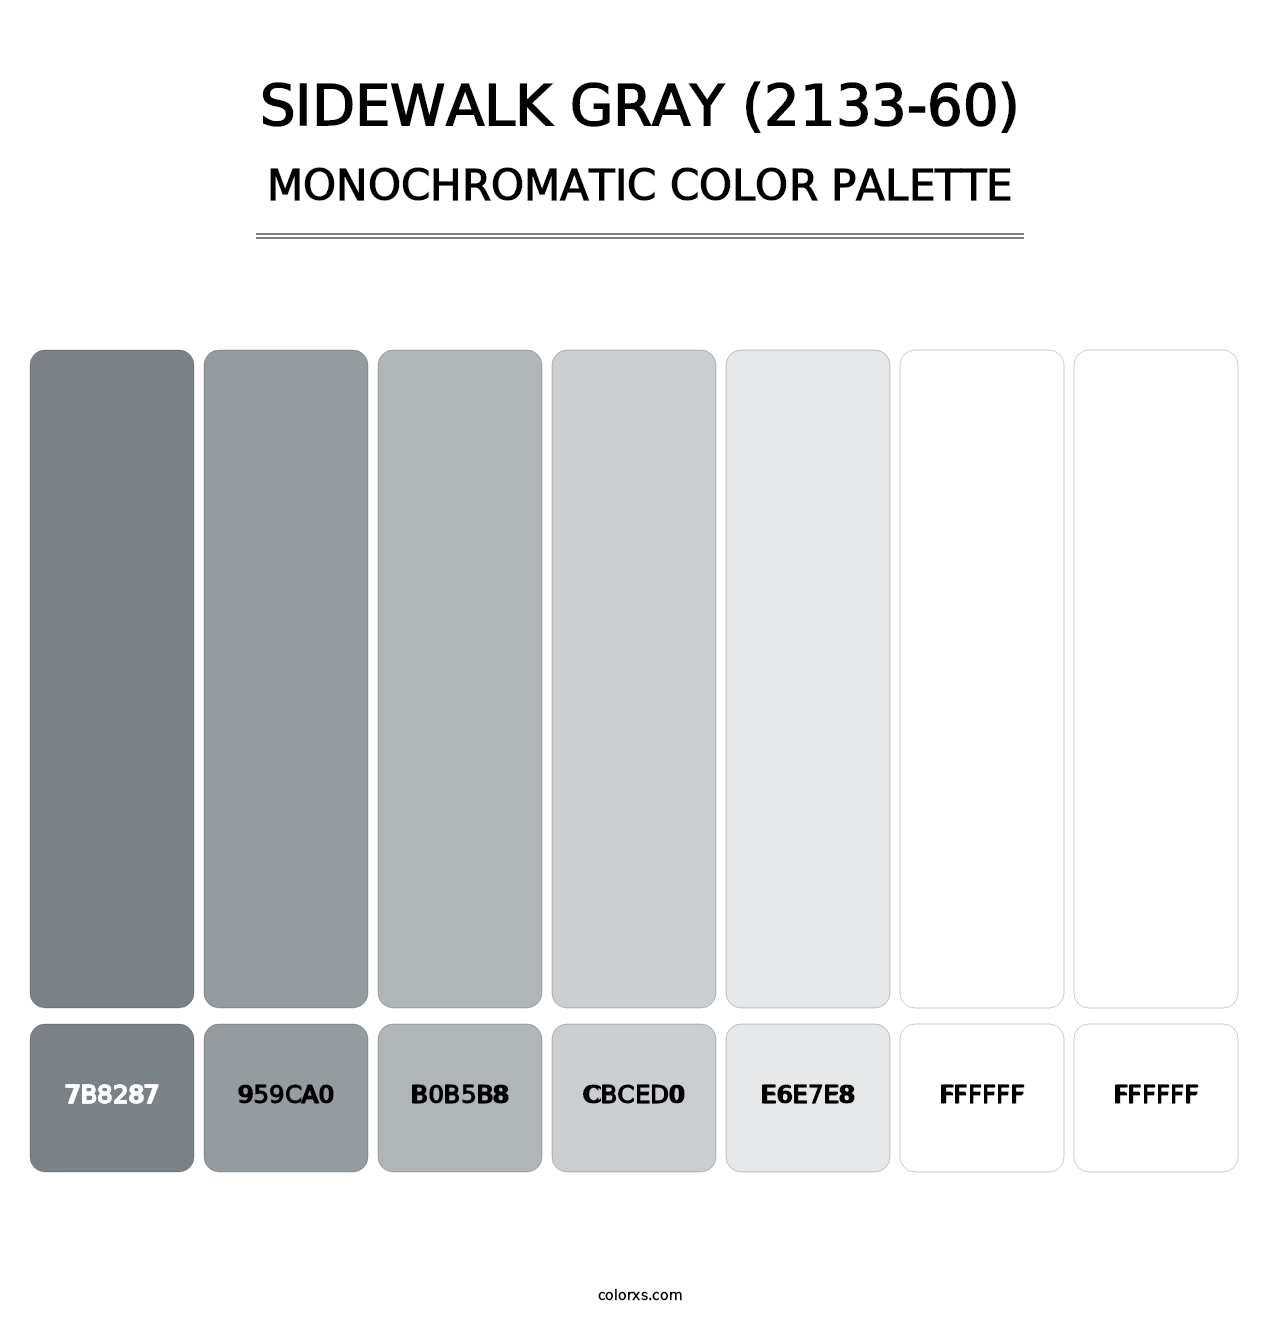 Sidewalk Gray (2133-60) - Monochromatic Color Palette